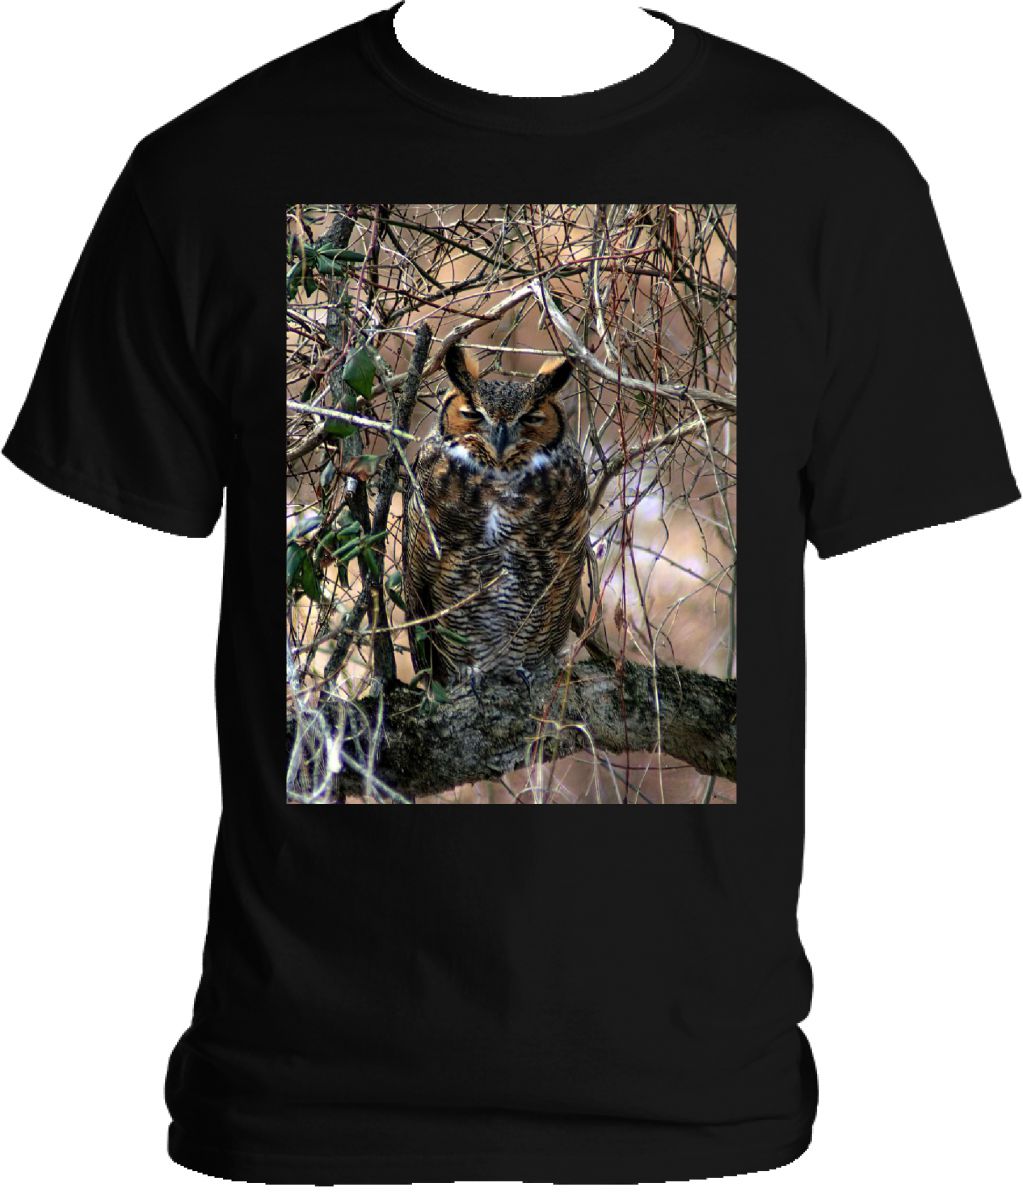 Owl T-shirt 2